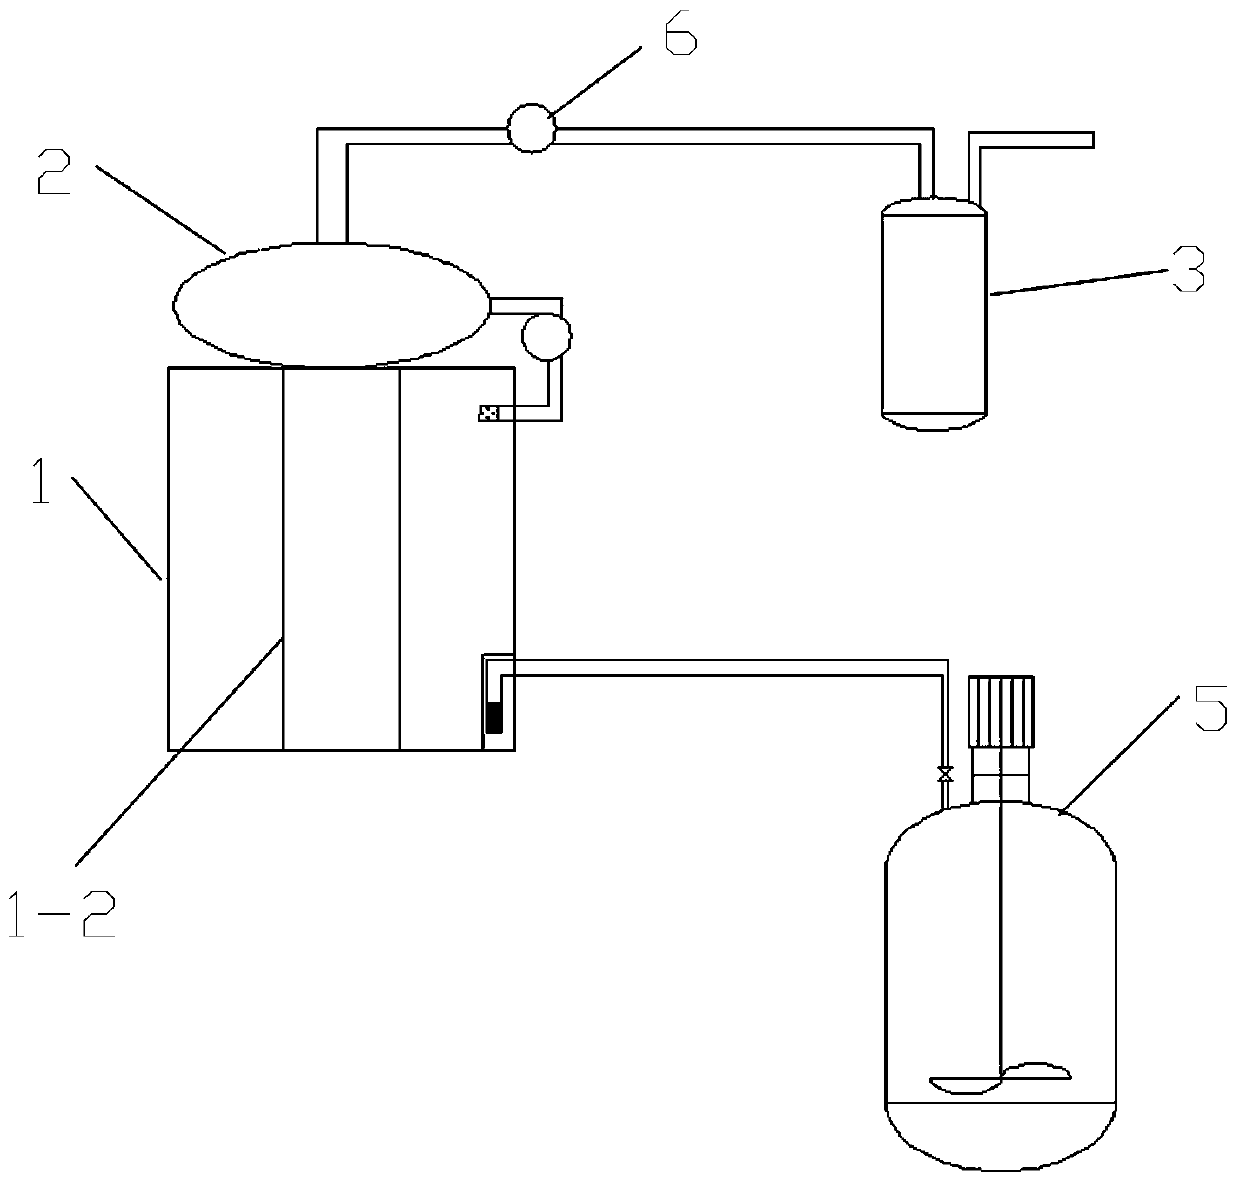 Biogas fermentation system